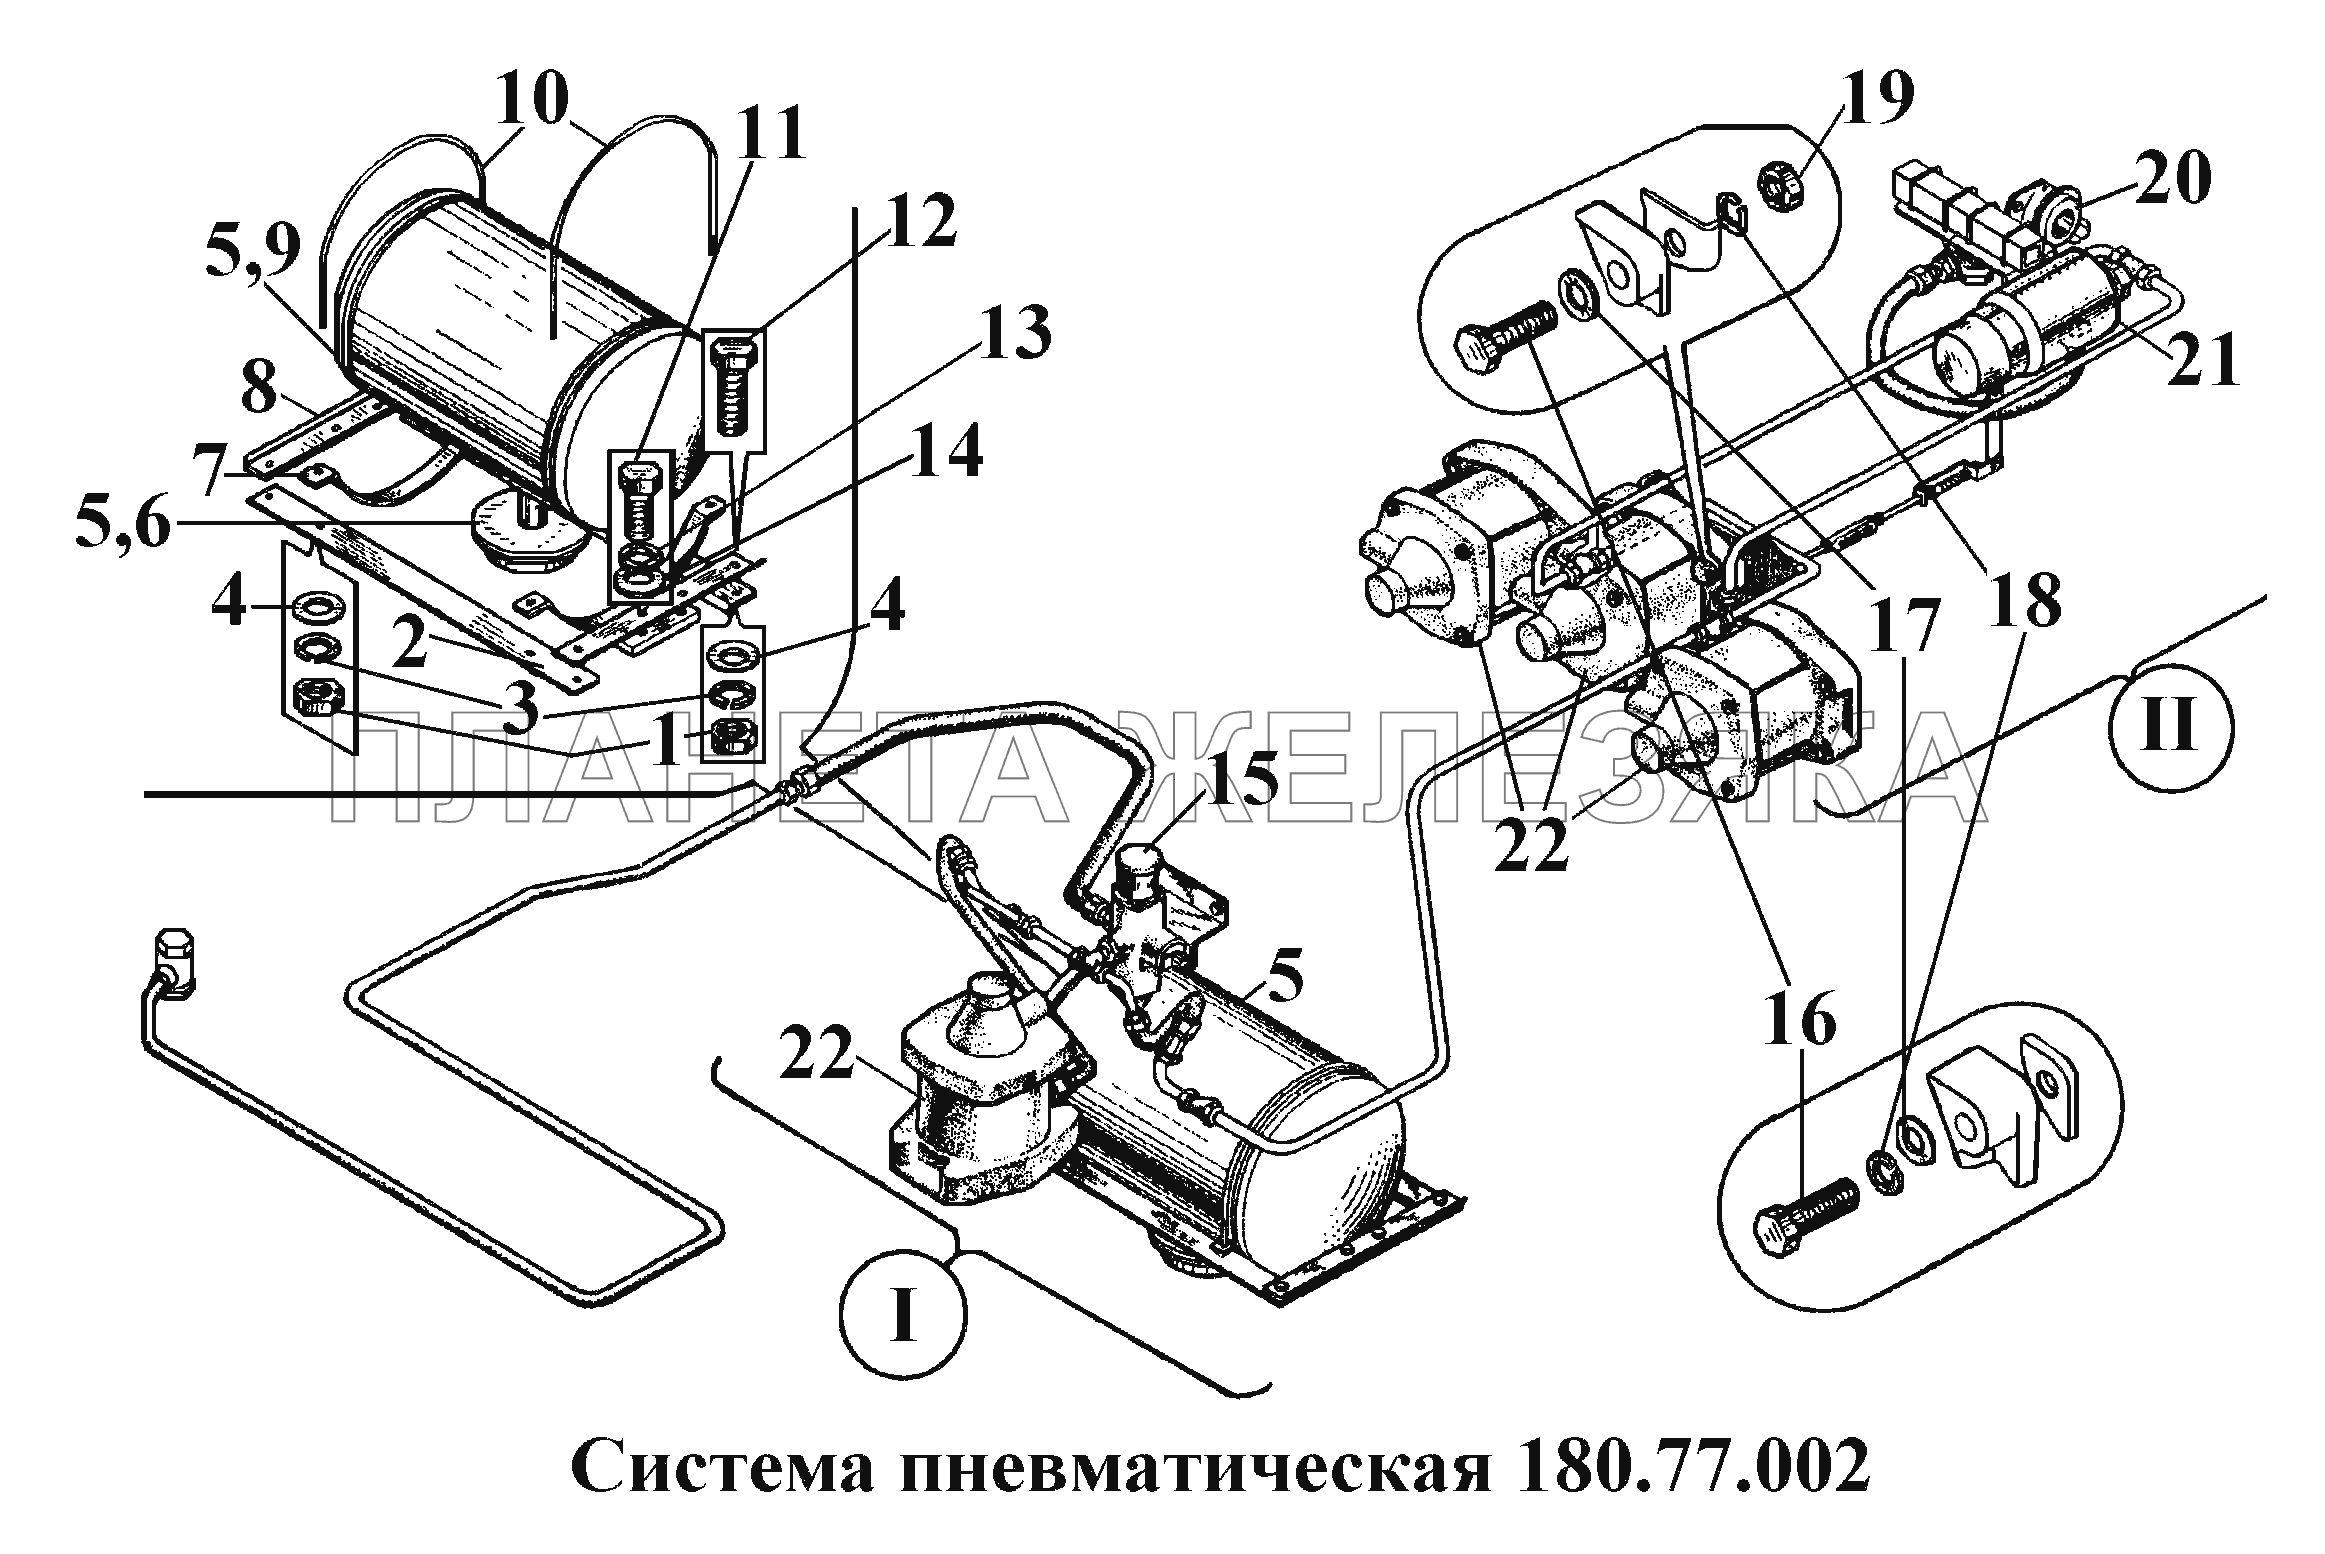 Система пневматическая 180.77.002 (1) ВТ-100Д